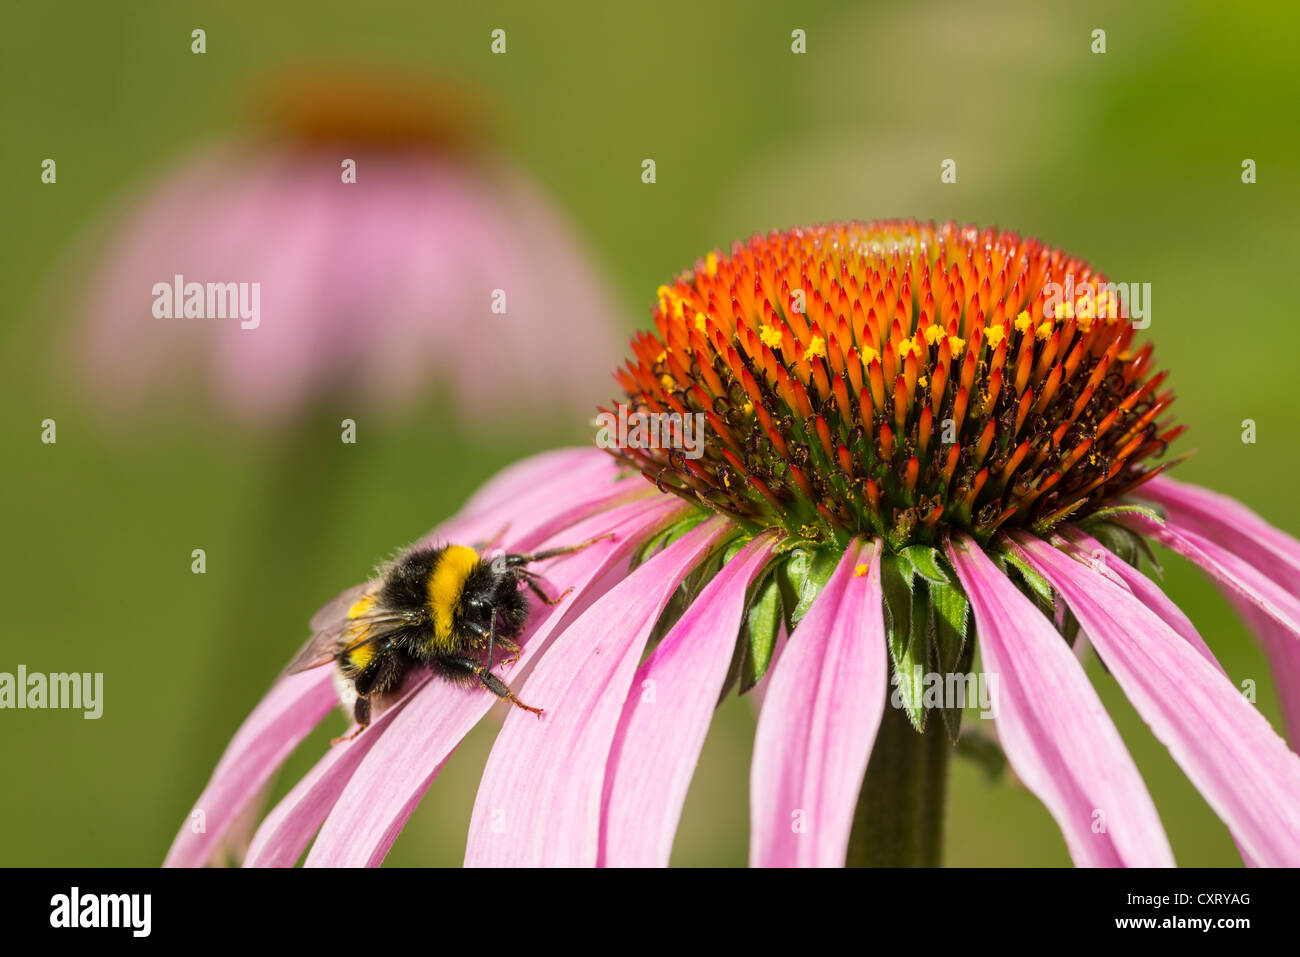 Buff-tailed bumblebee o terra di grandi dimensioni bumblebee (Bombus terrestris), su un viola Coneflower (Echinacea purpurea), Germania, Europa Foto Stock